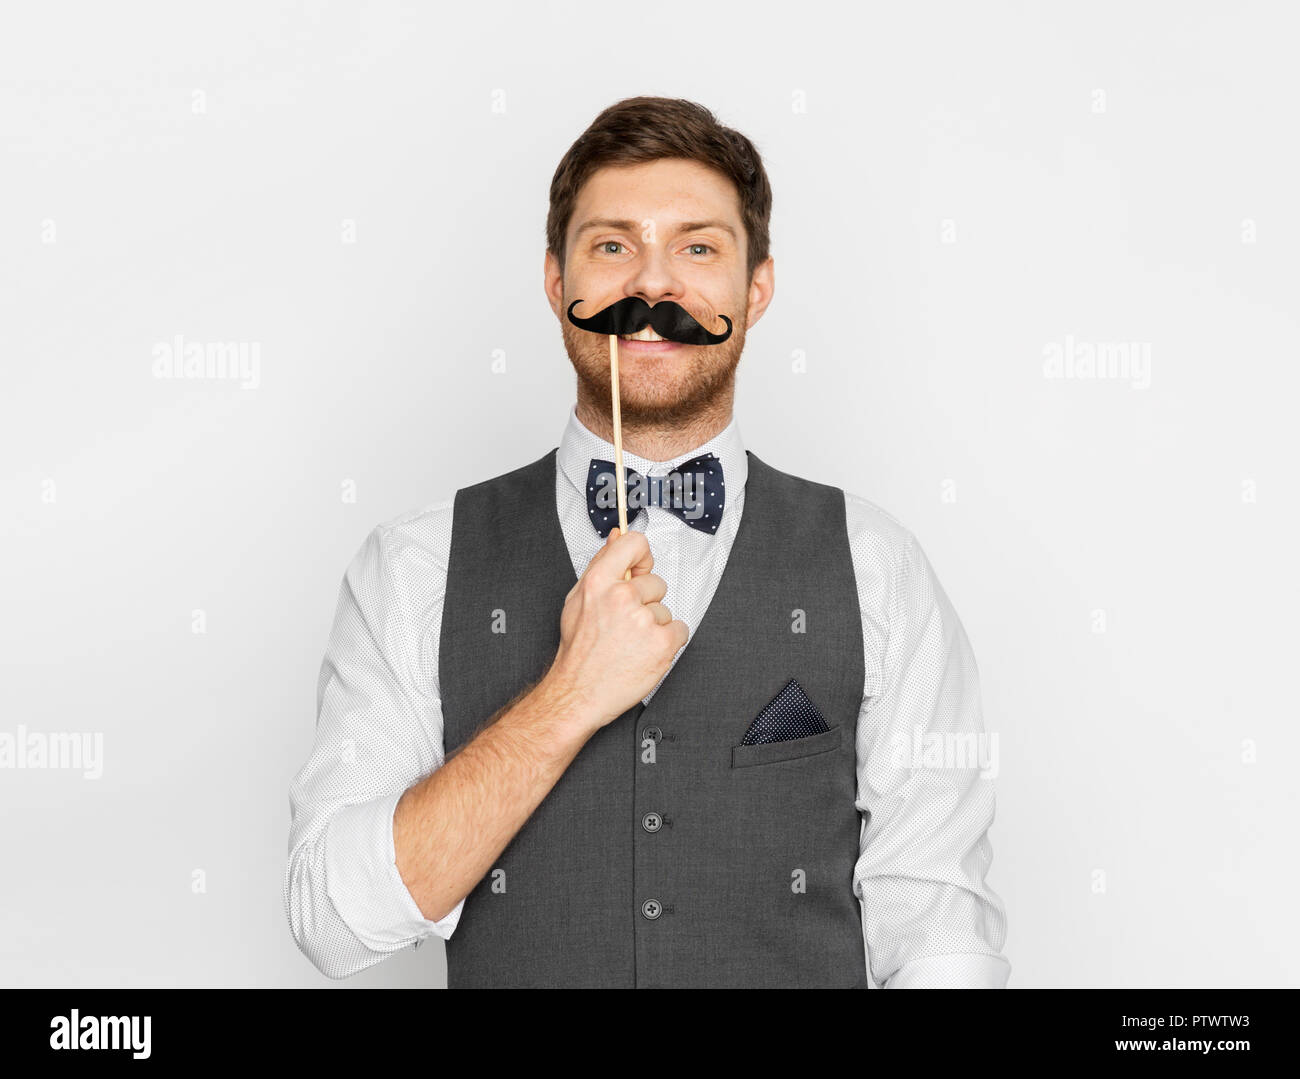 Felice giovane uomo con i baffi finti Foto stock - Alamy